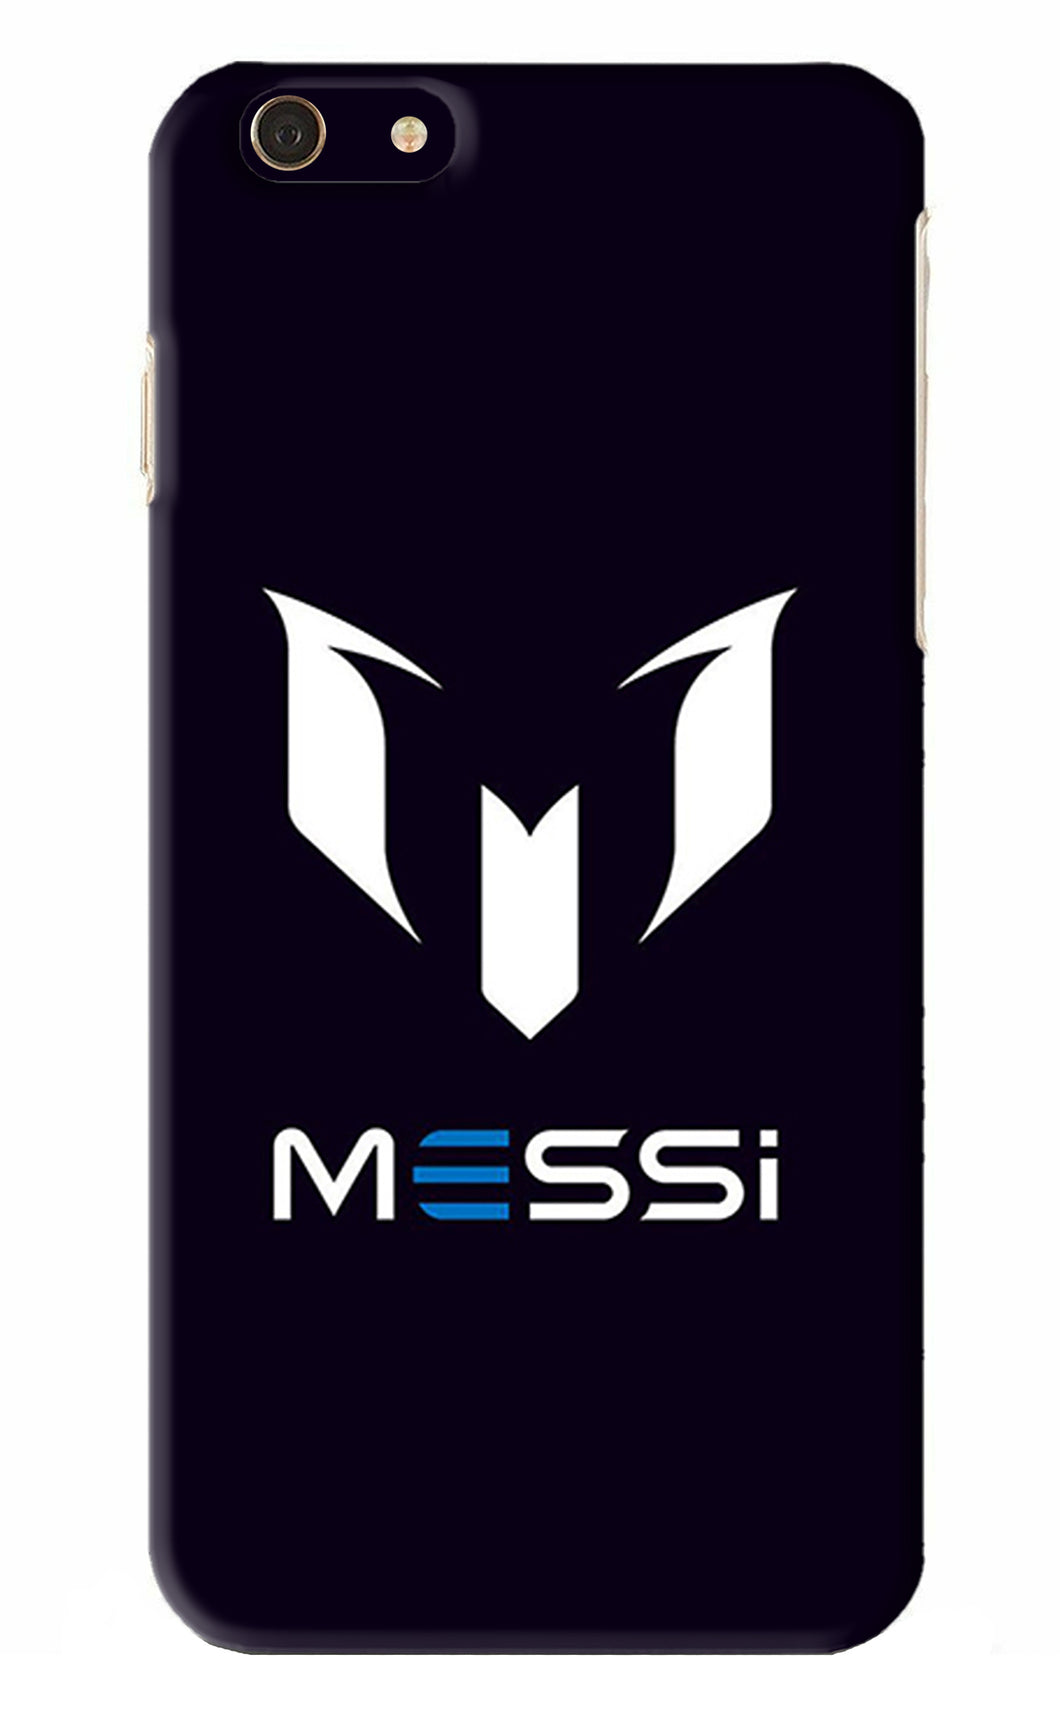 Messi Logo iPhone 6S Plus Back Skin Wrap